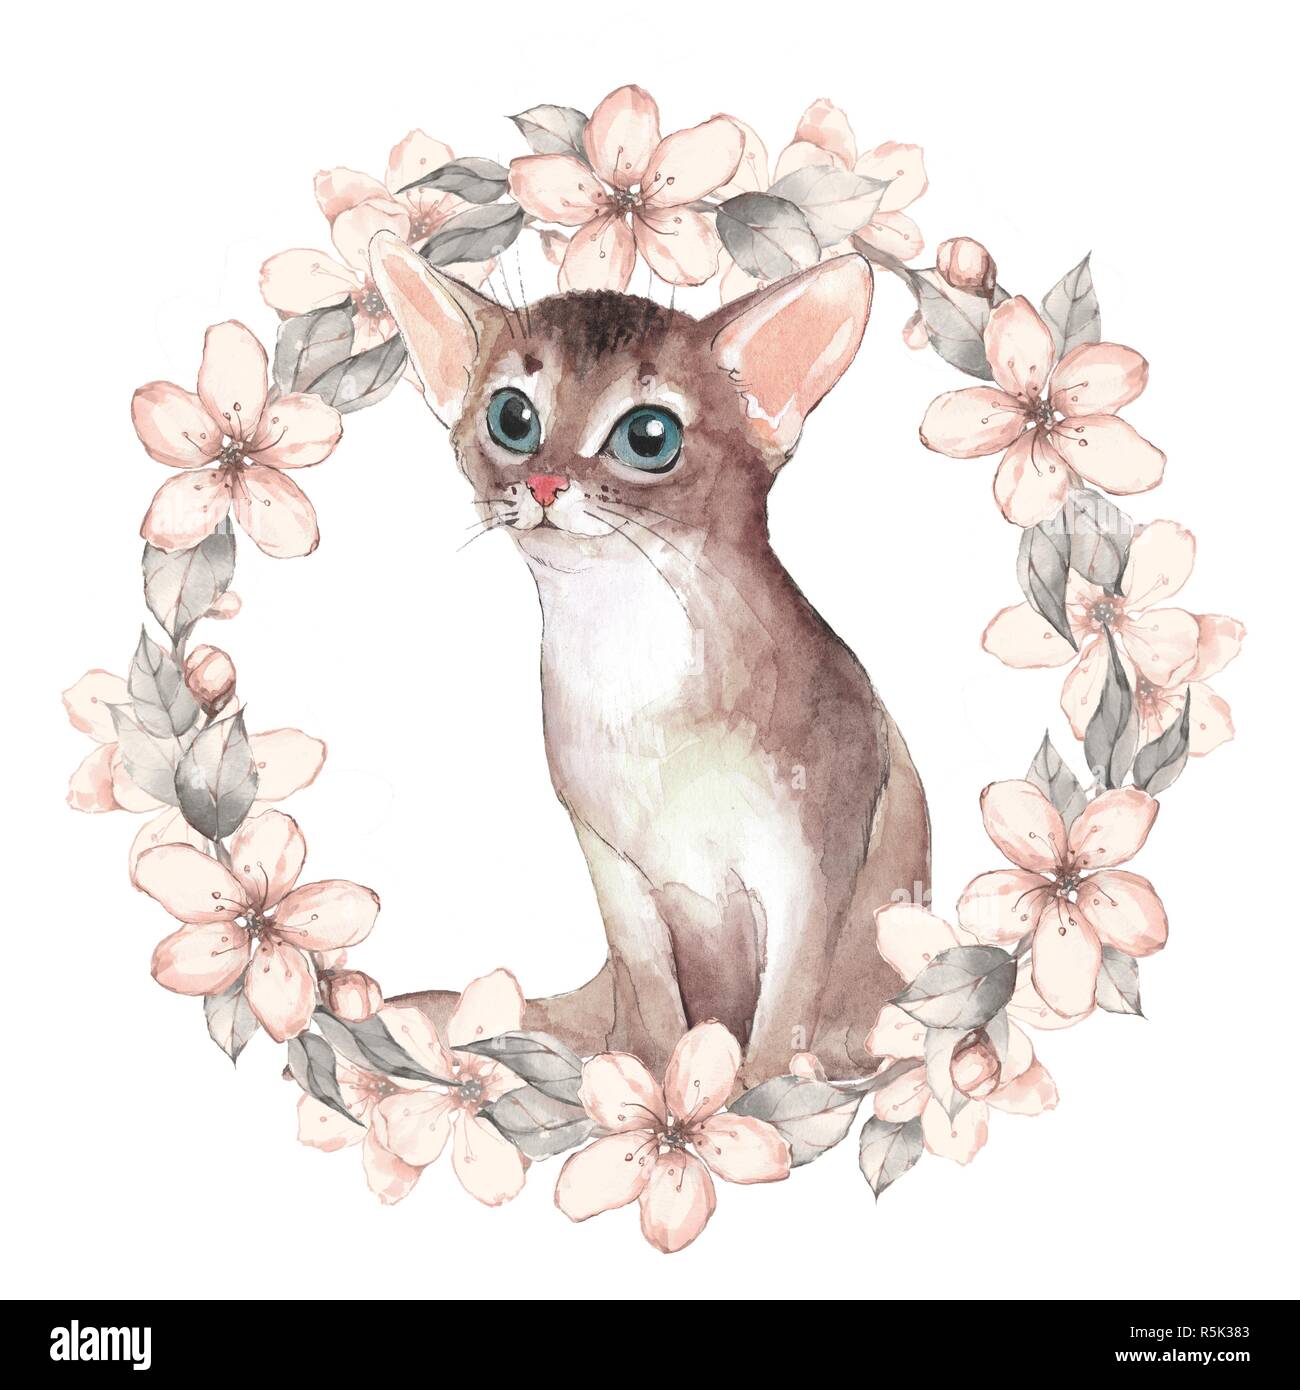 Cute kitten with wreath. Watercolor illustration Stock Photo